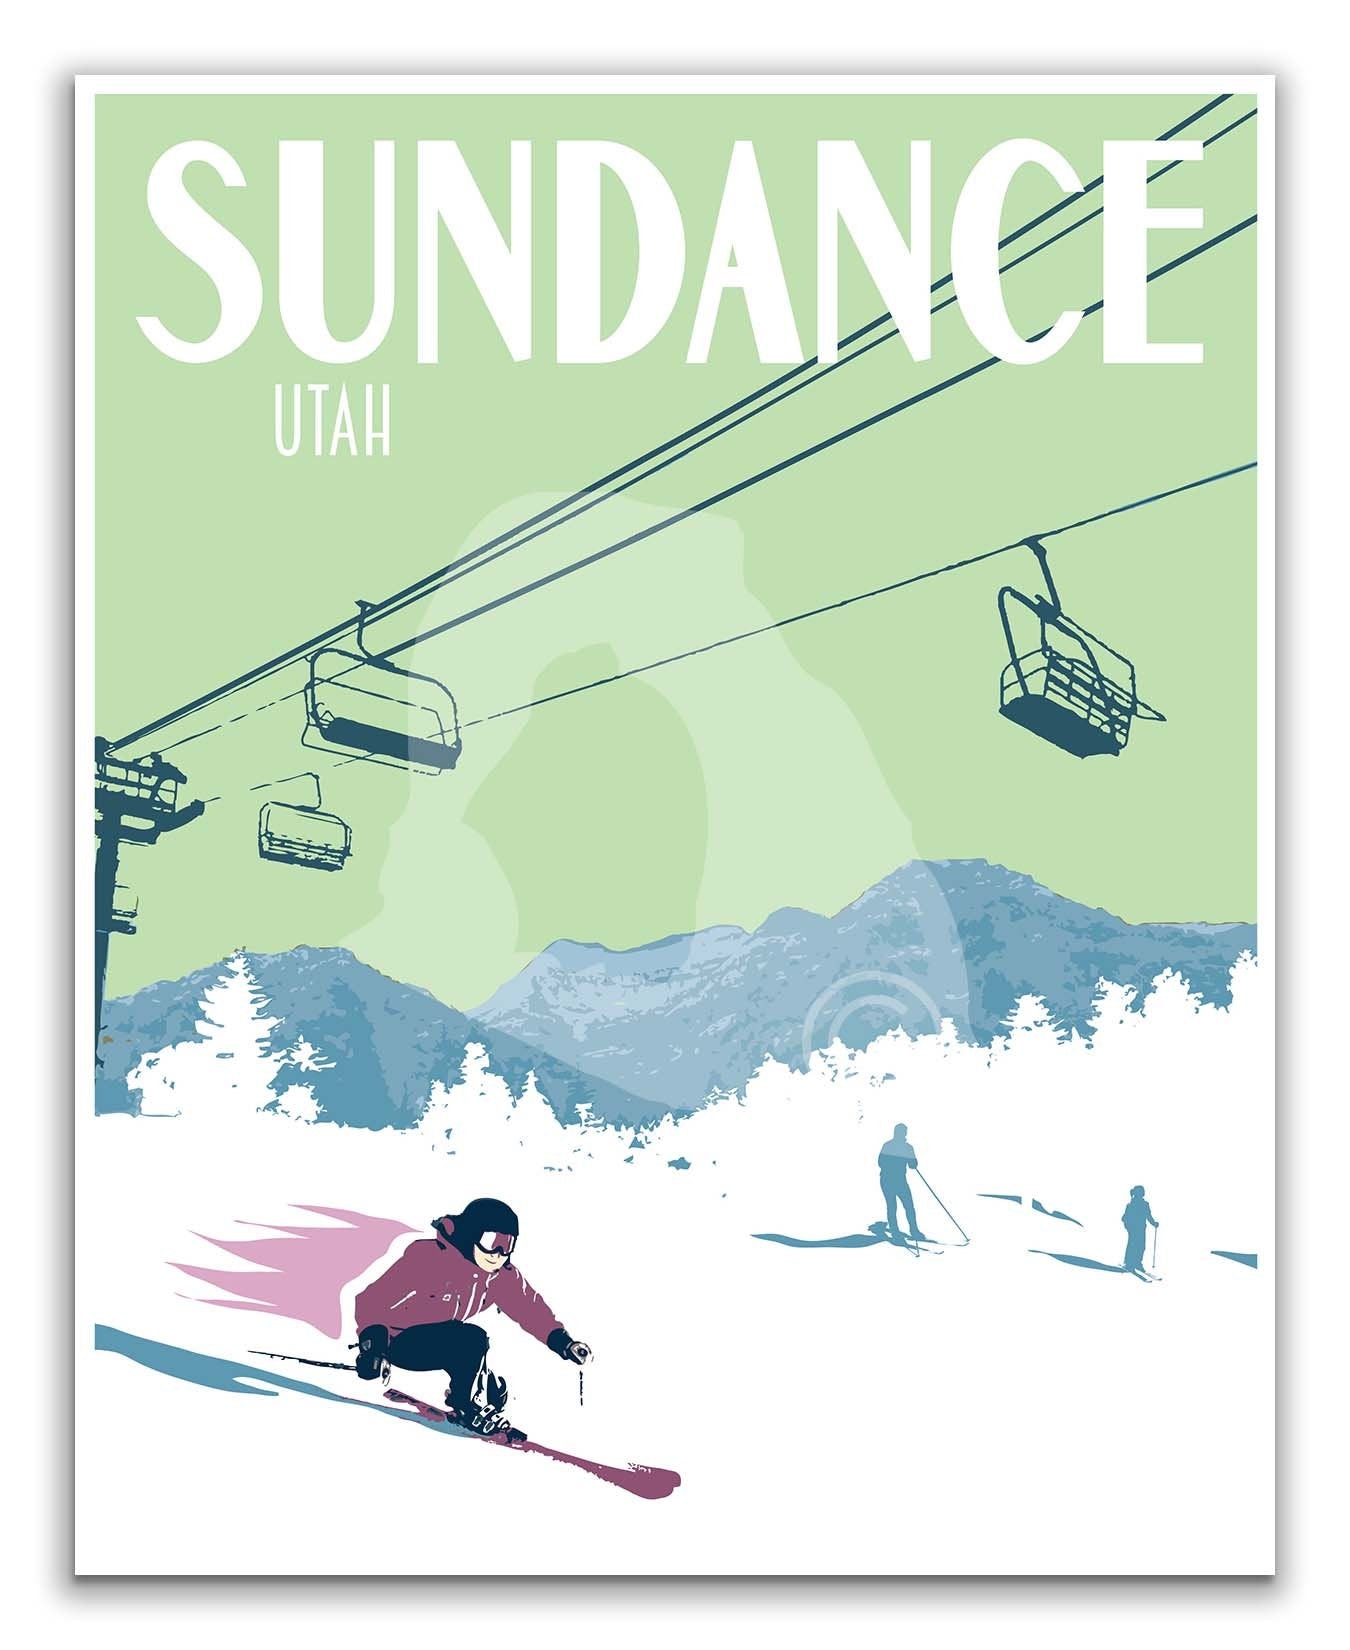 Ski Travel Prints, Sundance Poster, Park City Poster, Copper Mountain Poster, Ski Vintage Style Travel Art, Three Print Value Set